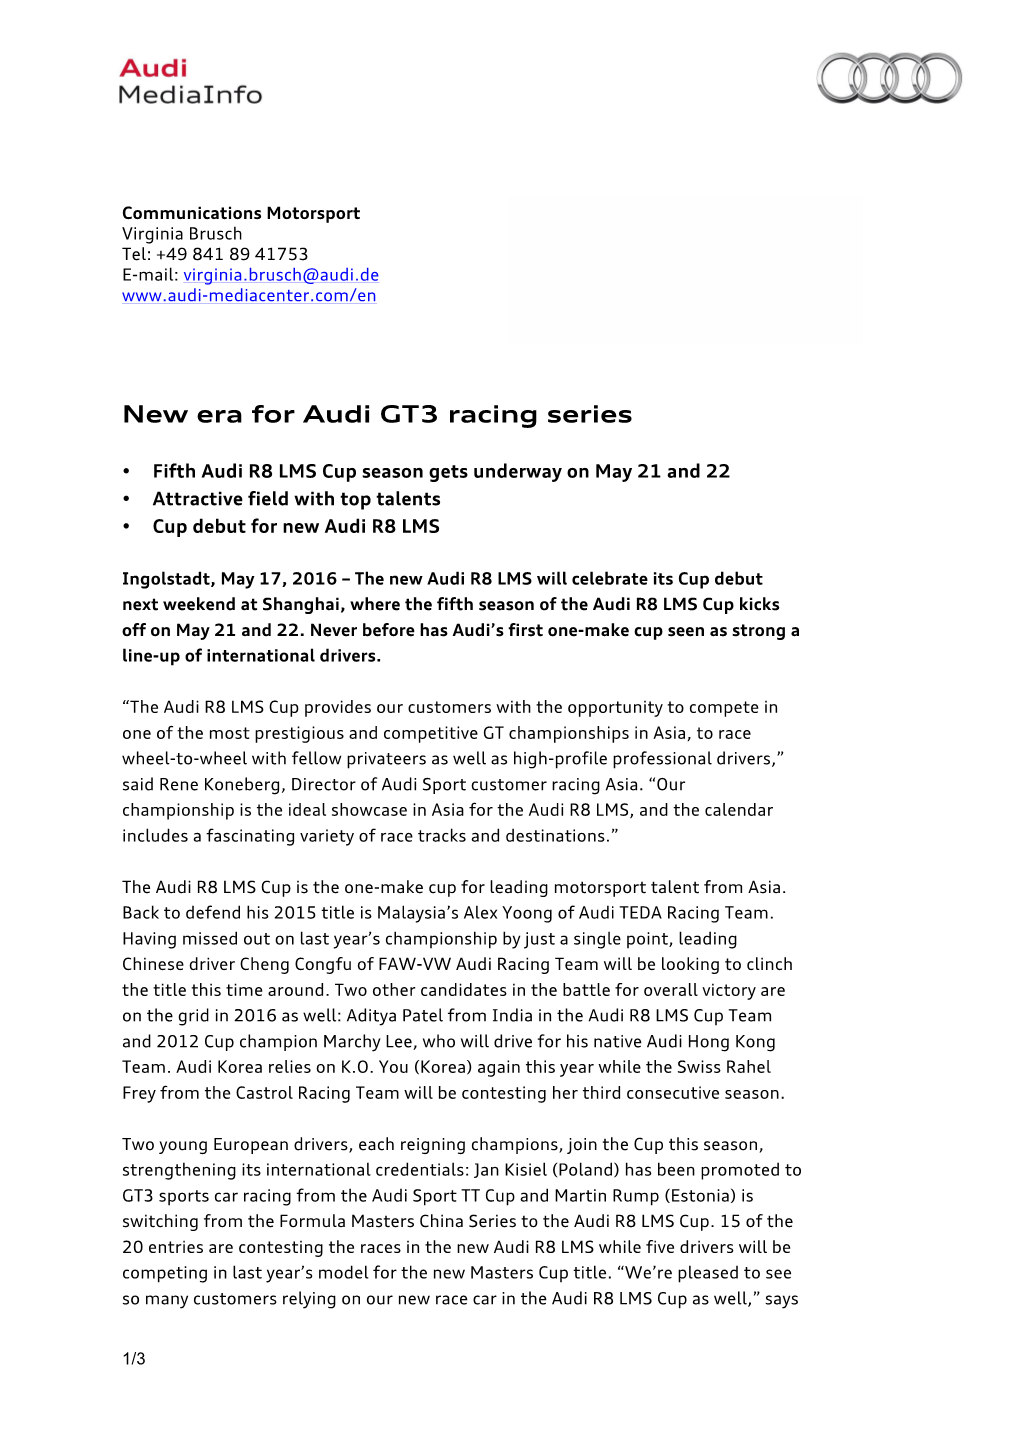 New Era for Audi GT3 Racing Series